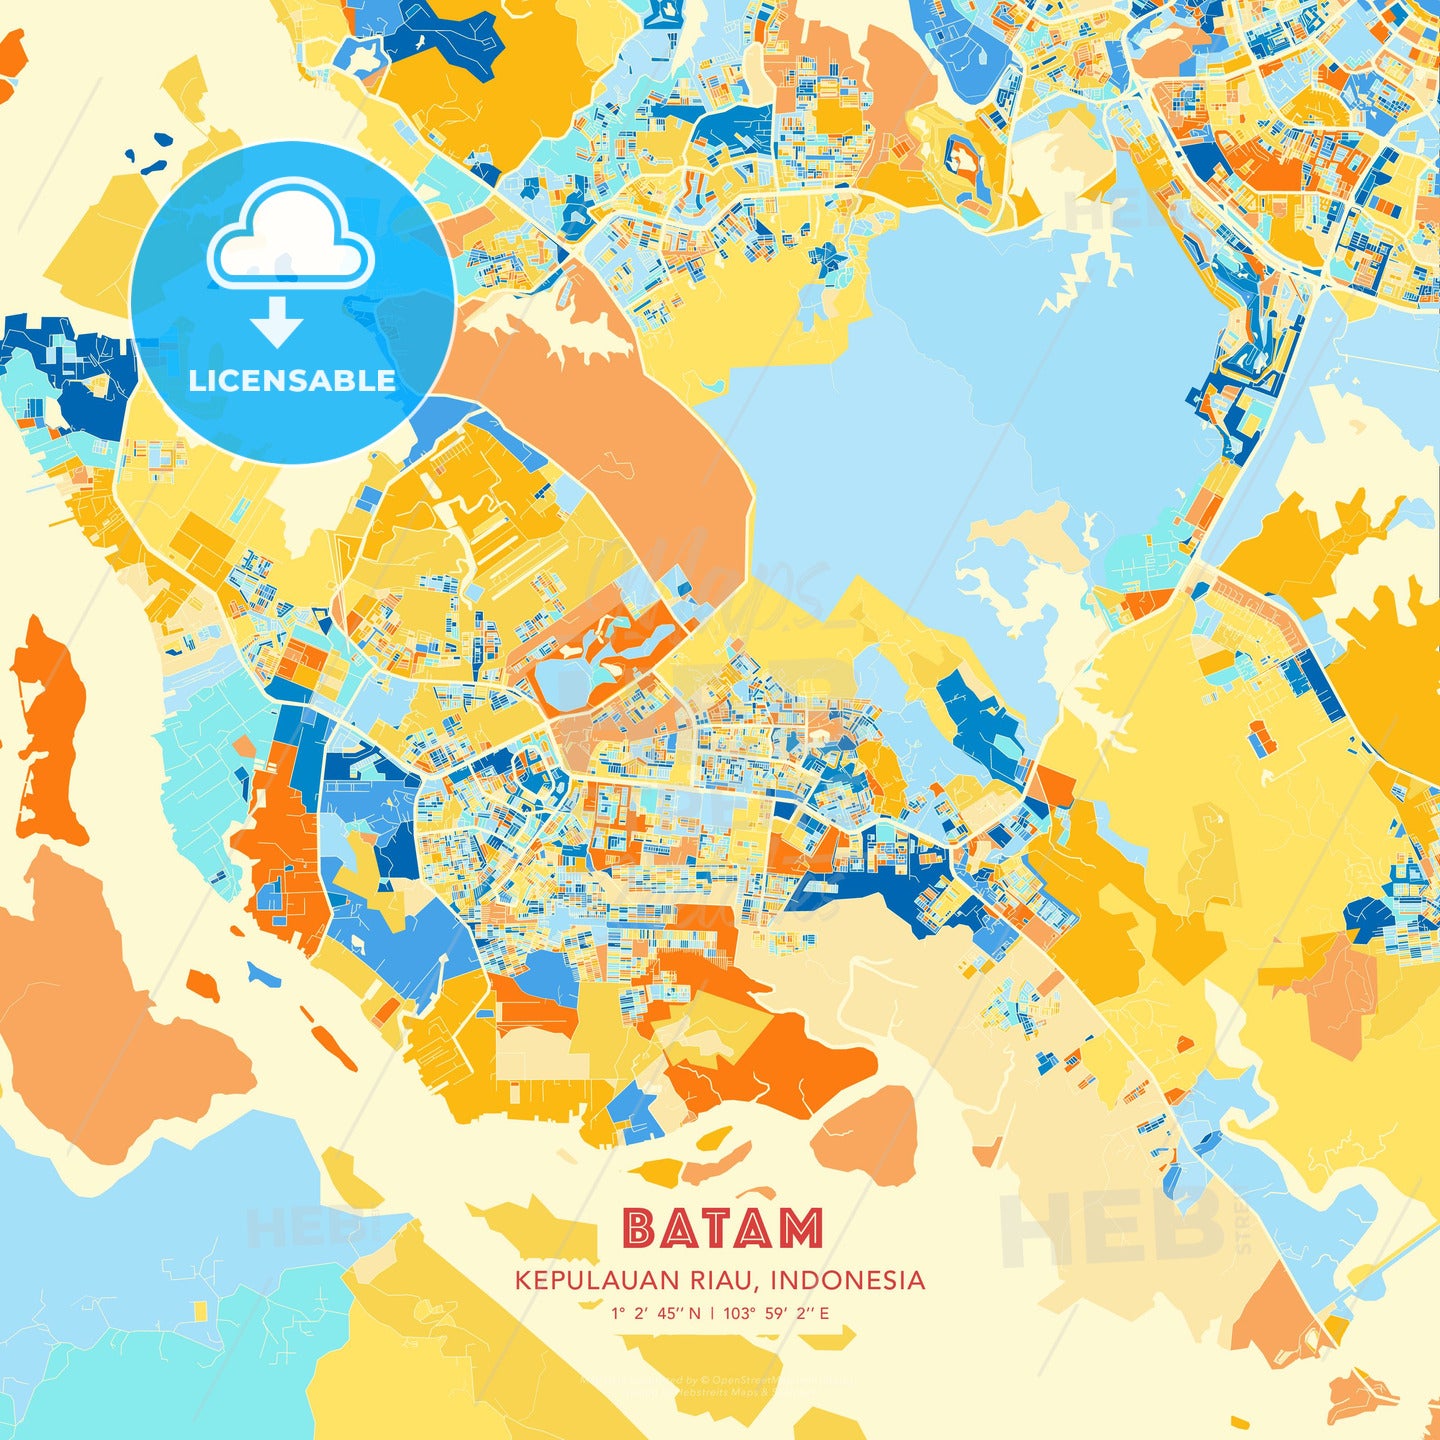 Batam, Kepulauan Riau, Indonesia, map - HEBSTREITS Sketches